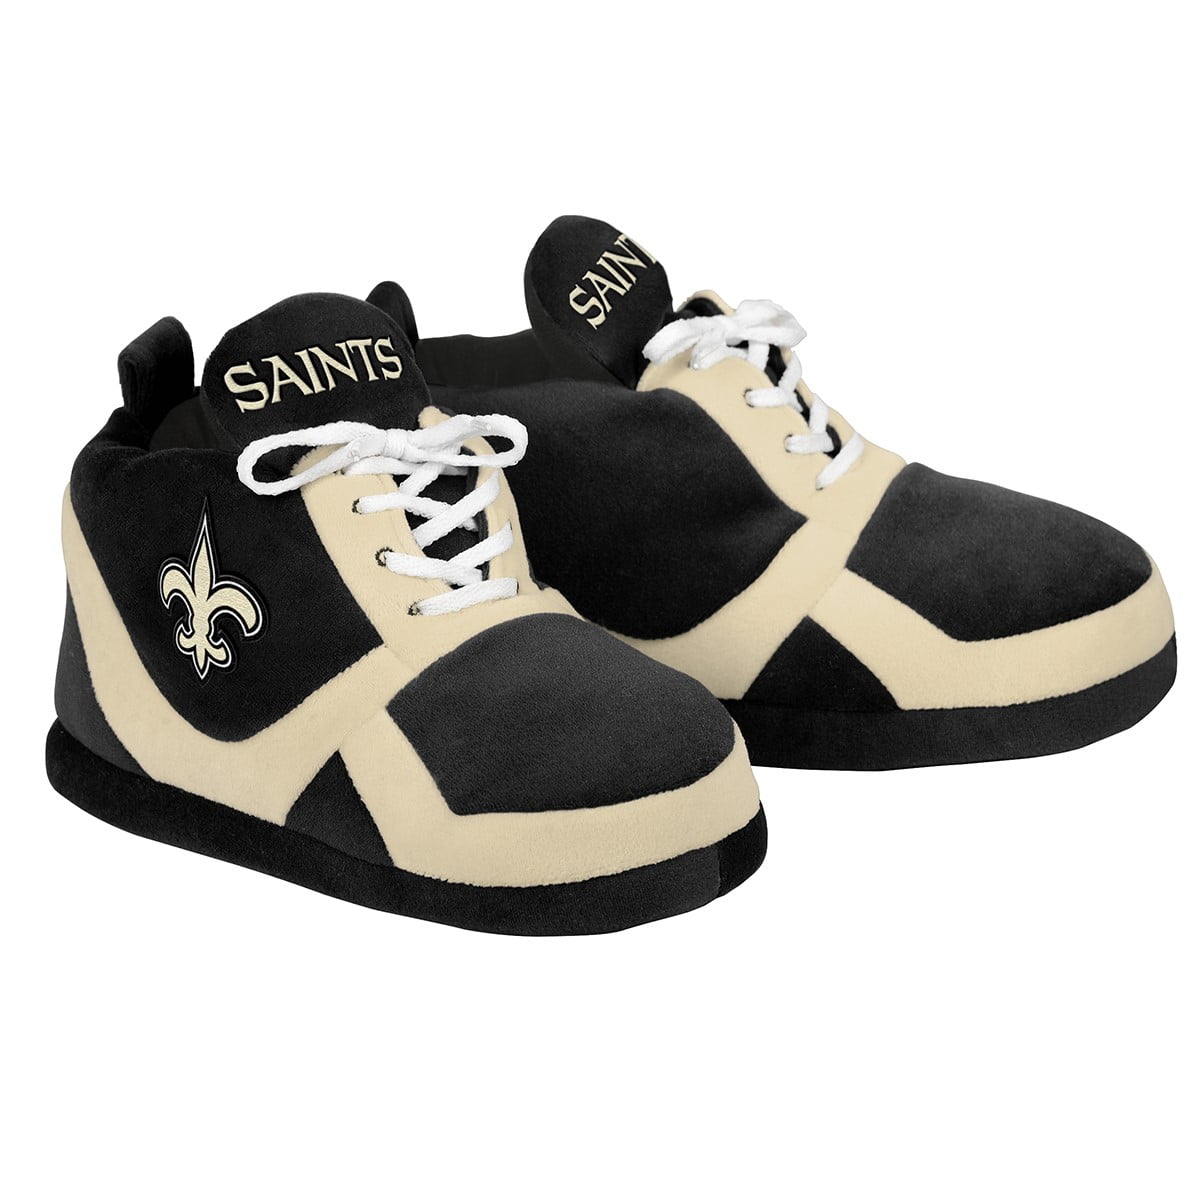 New Orleans Saints Sneaker Slippers 